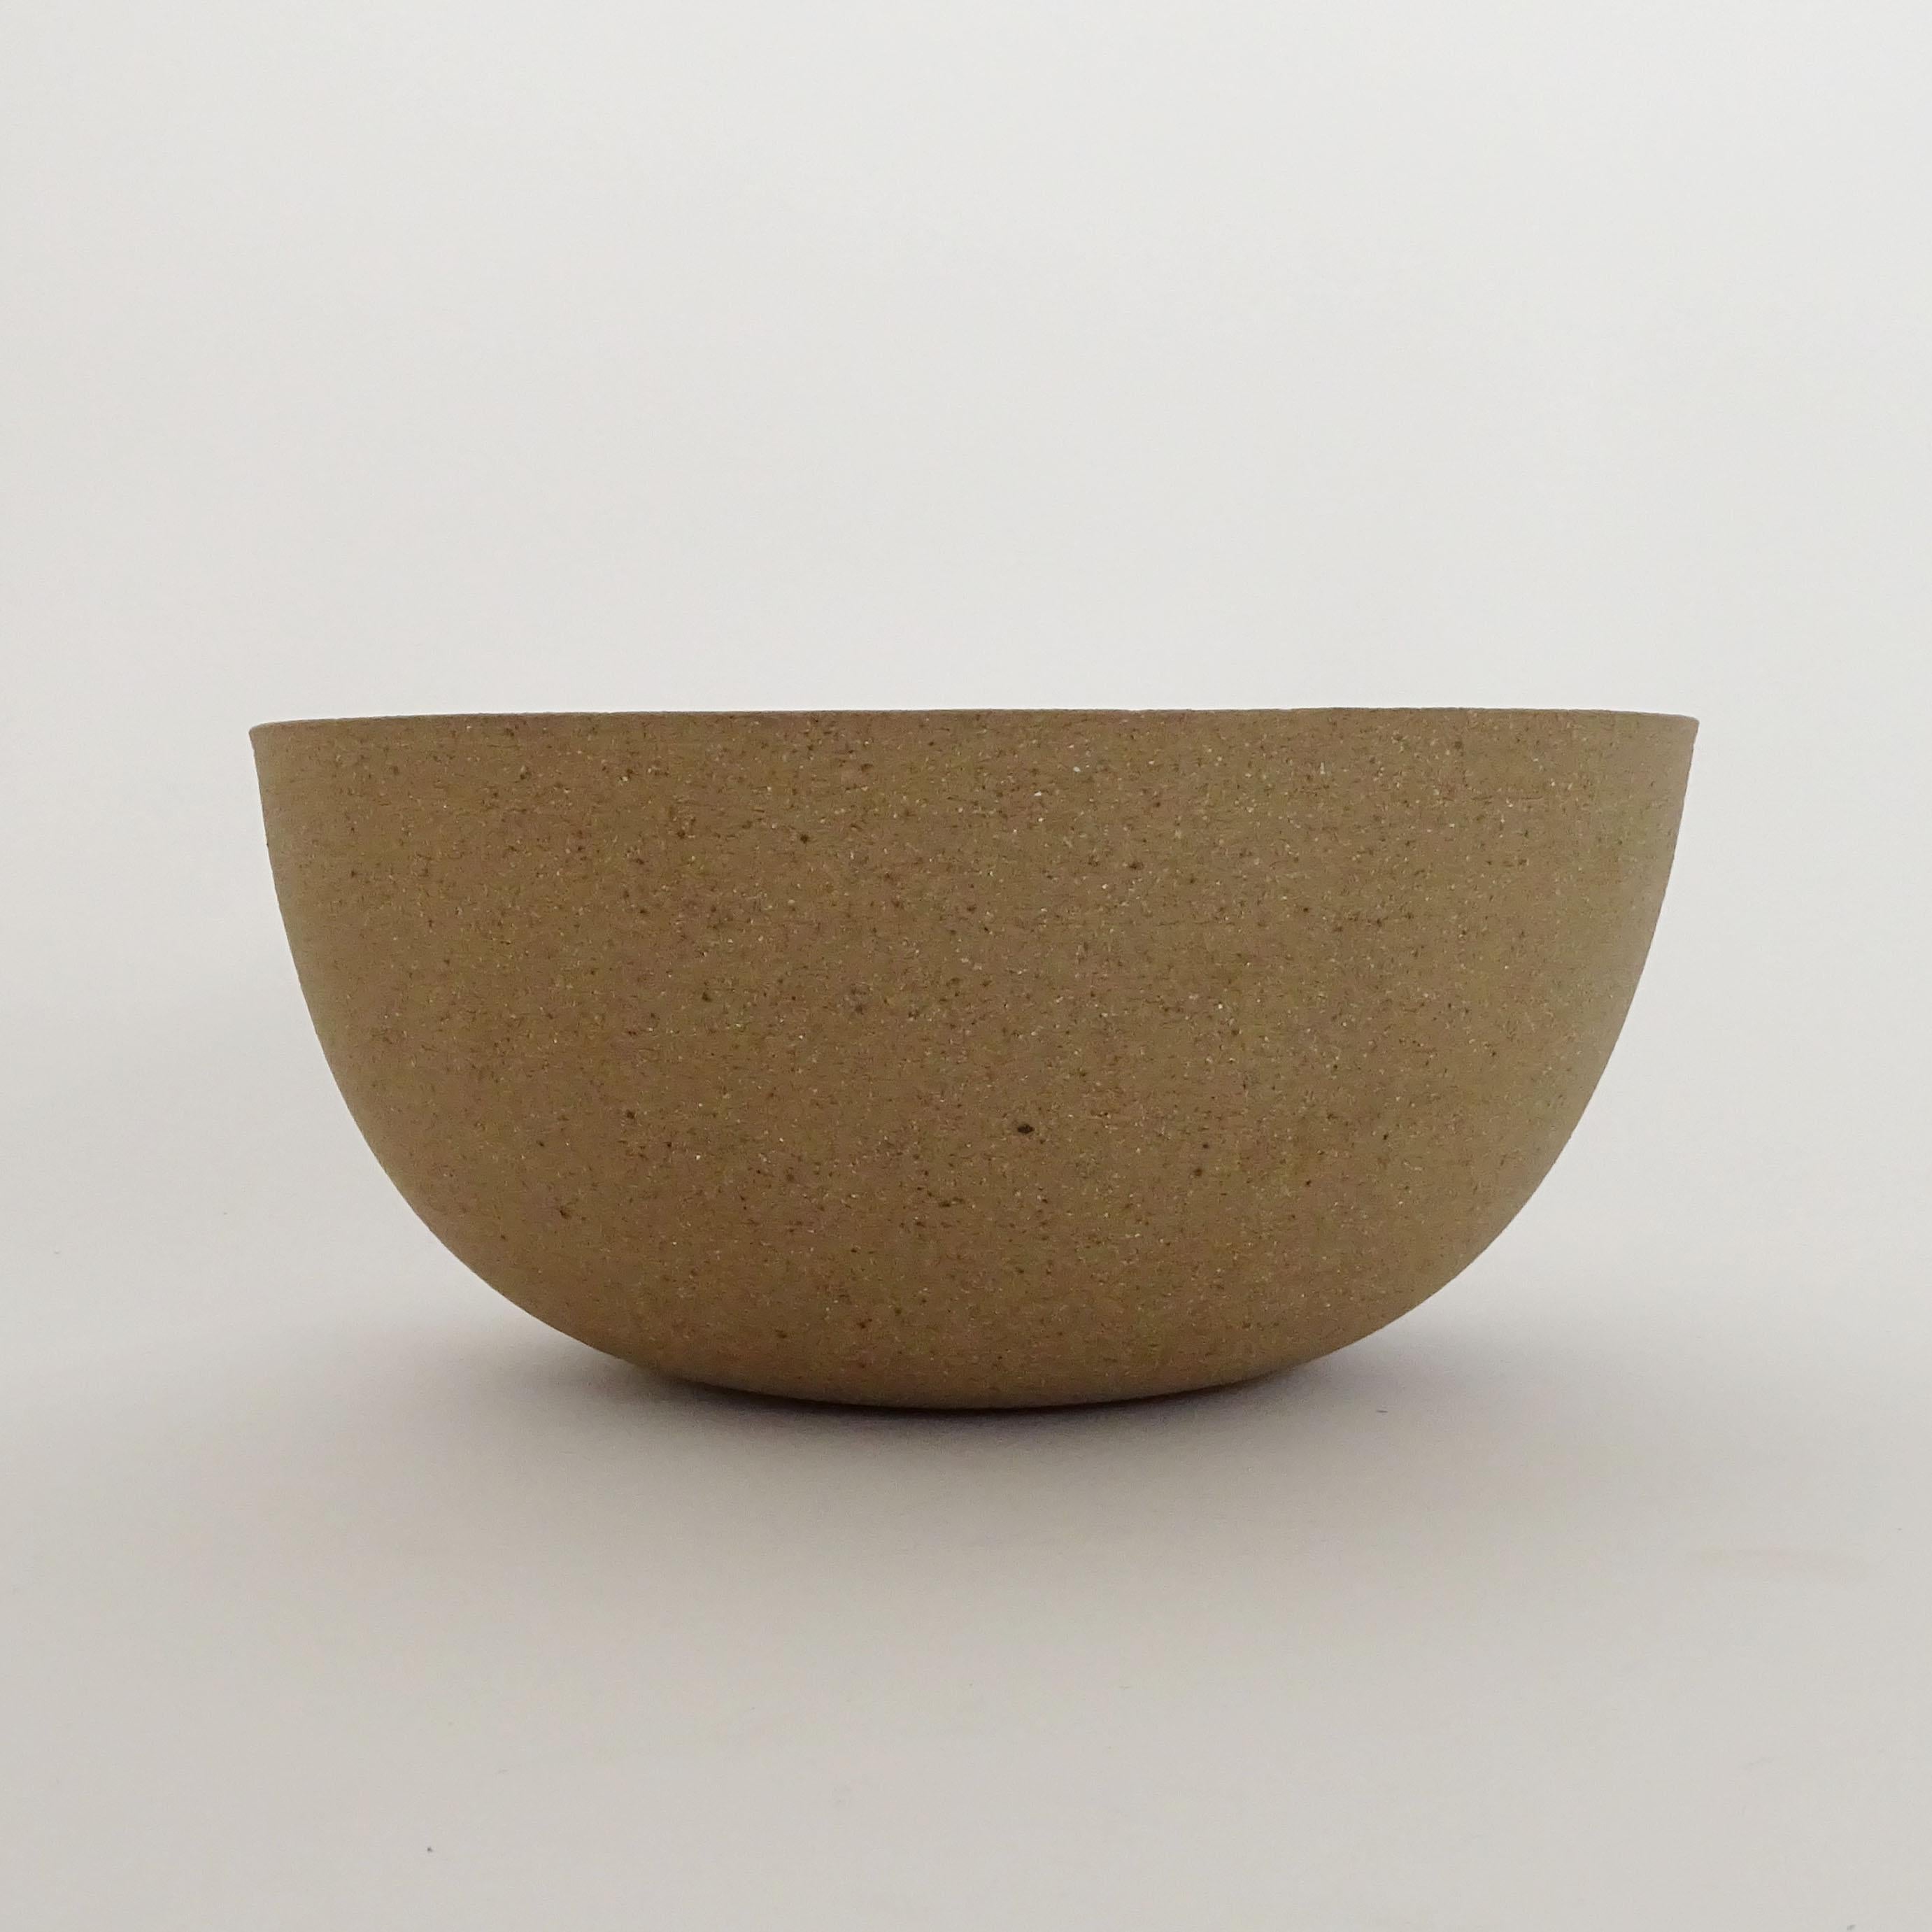 Sublime Nanni Valentini large bowl for Ceramica Arcore
Signed CA.